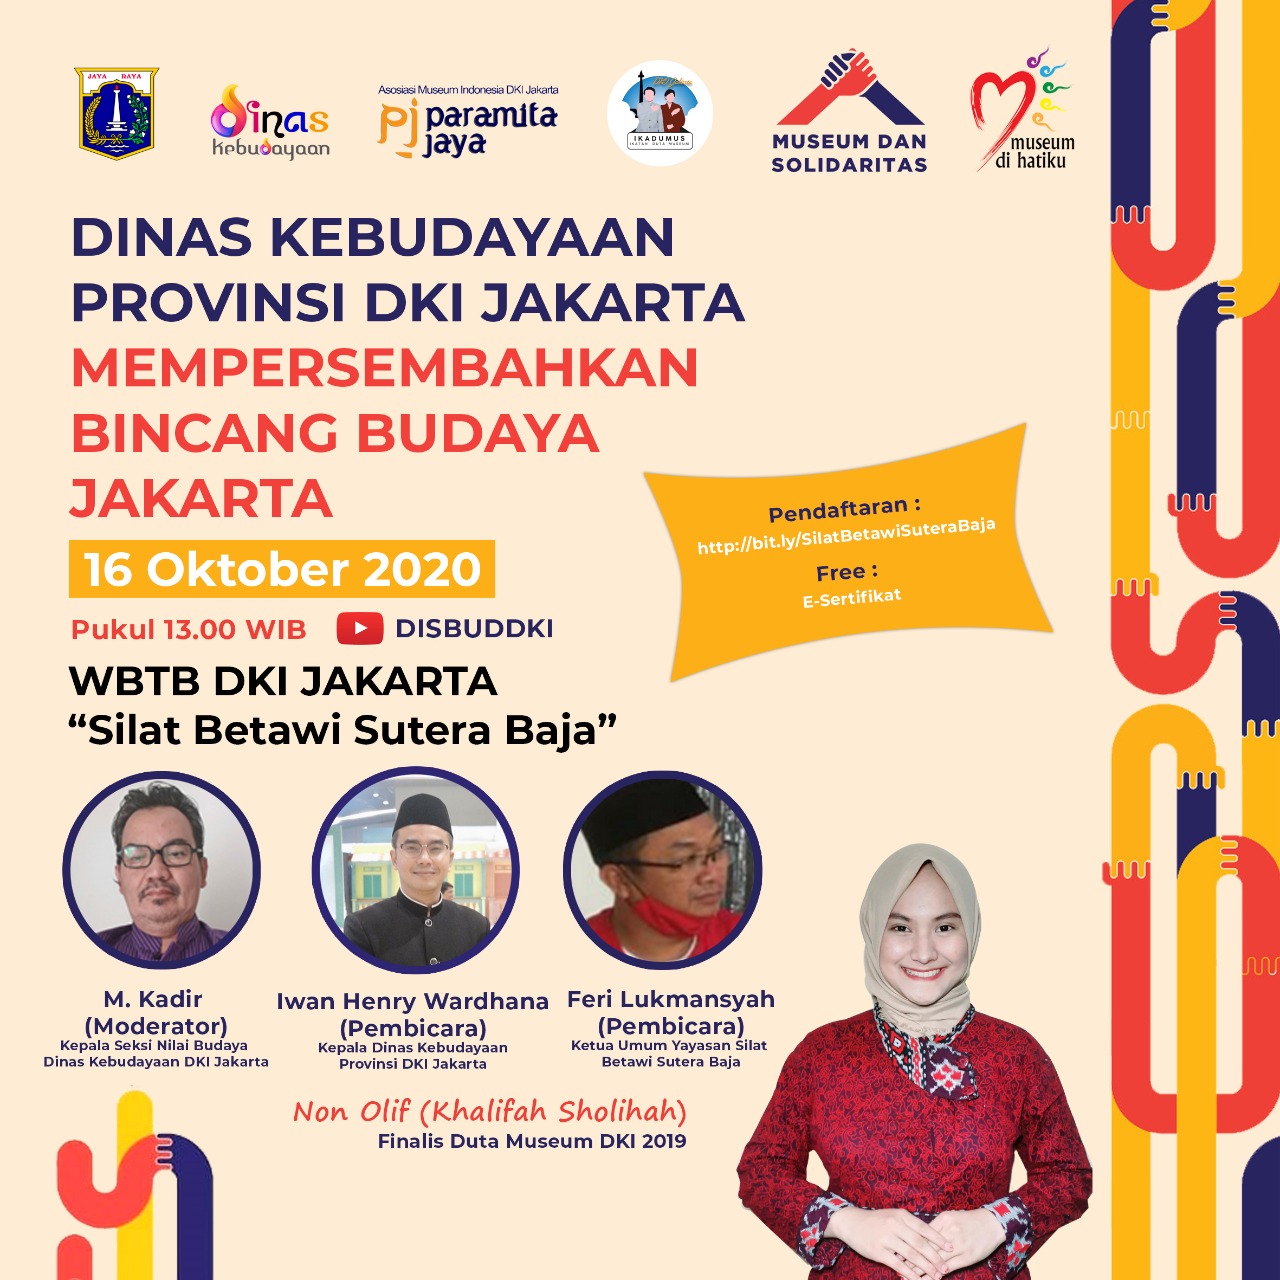 Webinar Bincang Budaya Jakarta WBTB DKI Jakarta "Silat Betawi Sutera Baja"